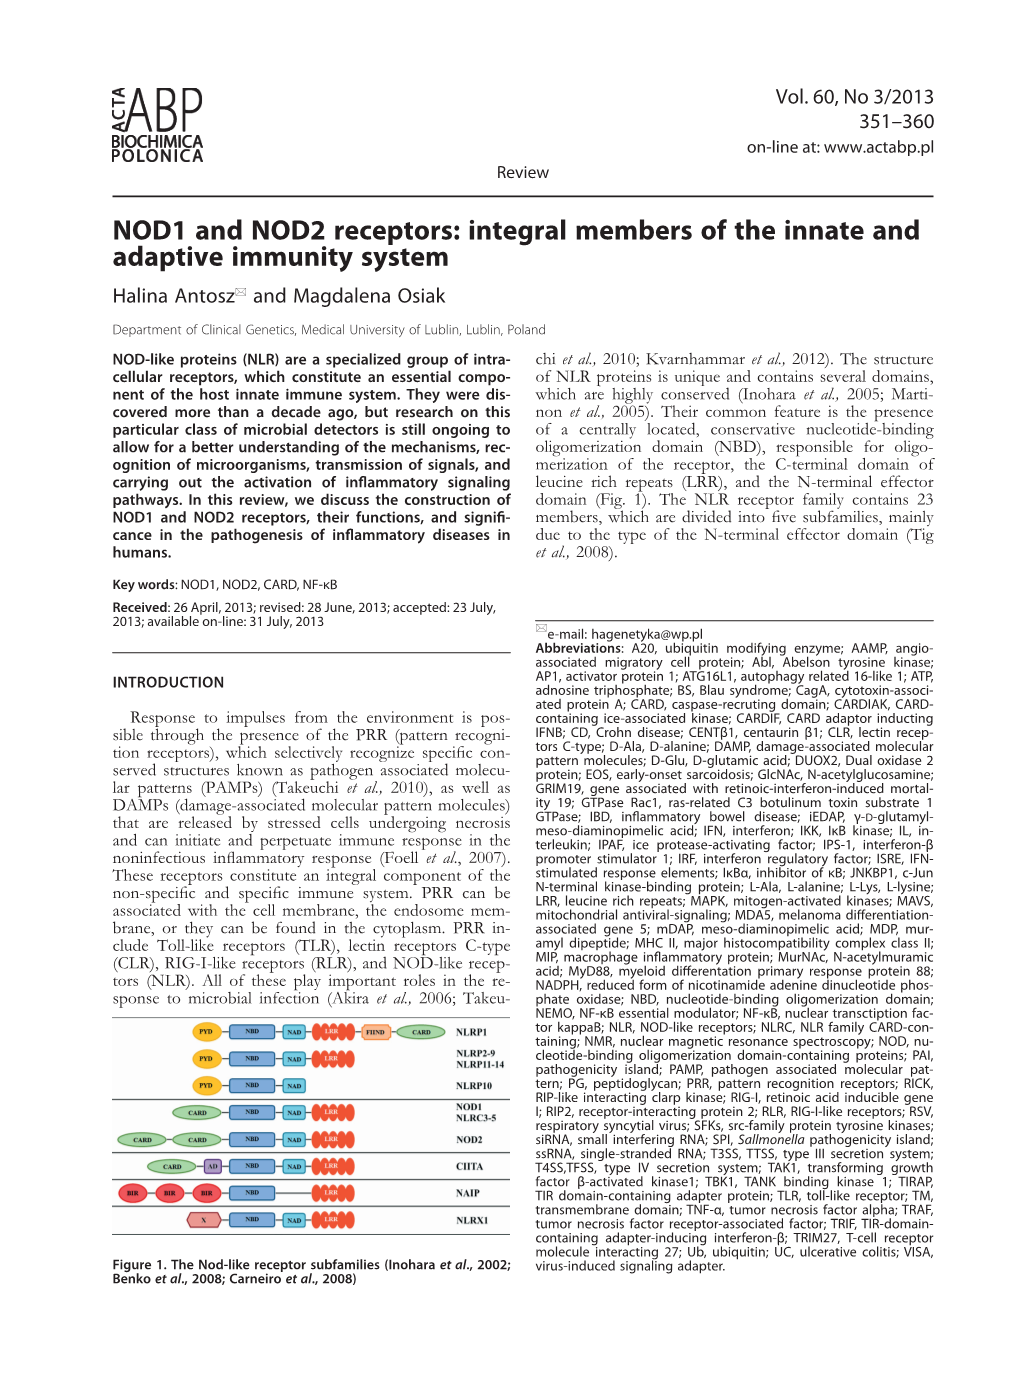 NOD1 and NOD2 Receptors: Integral Members of the Innate and Adaptive Immunity System Halina Antosz* and Magdalena Osiak